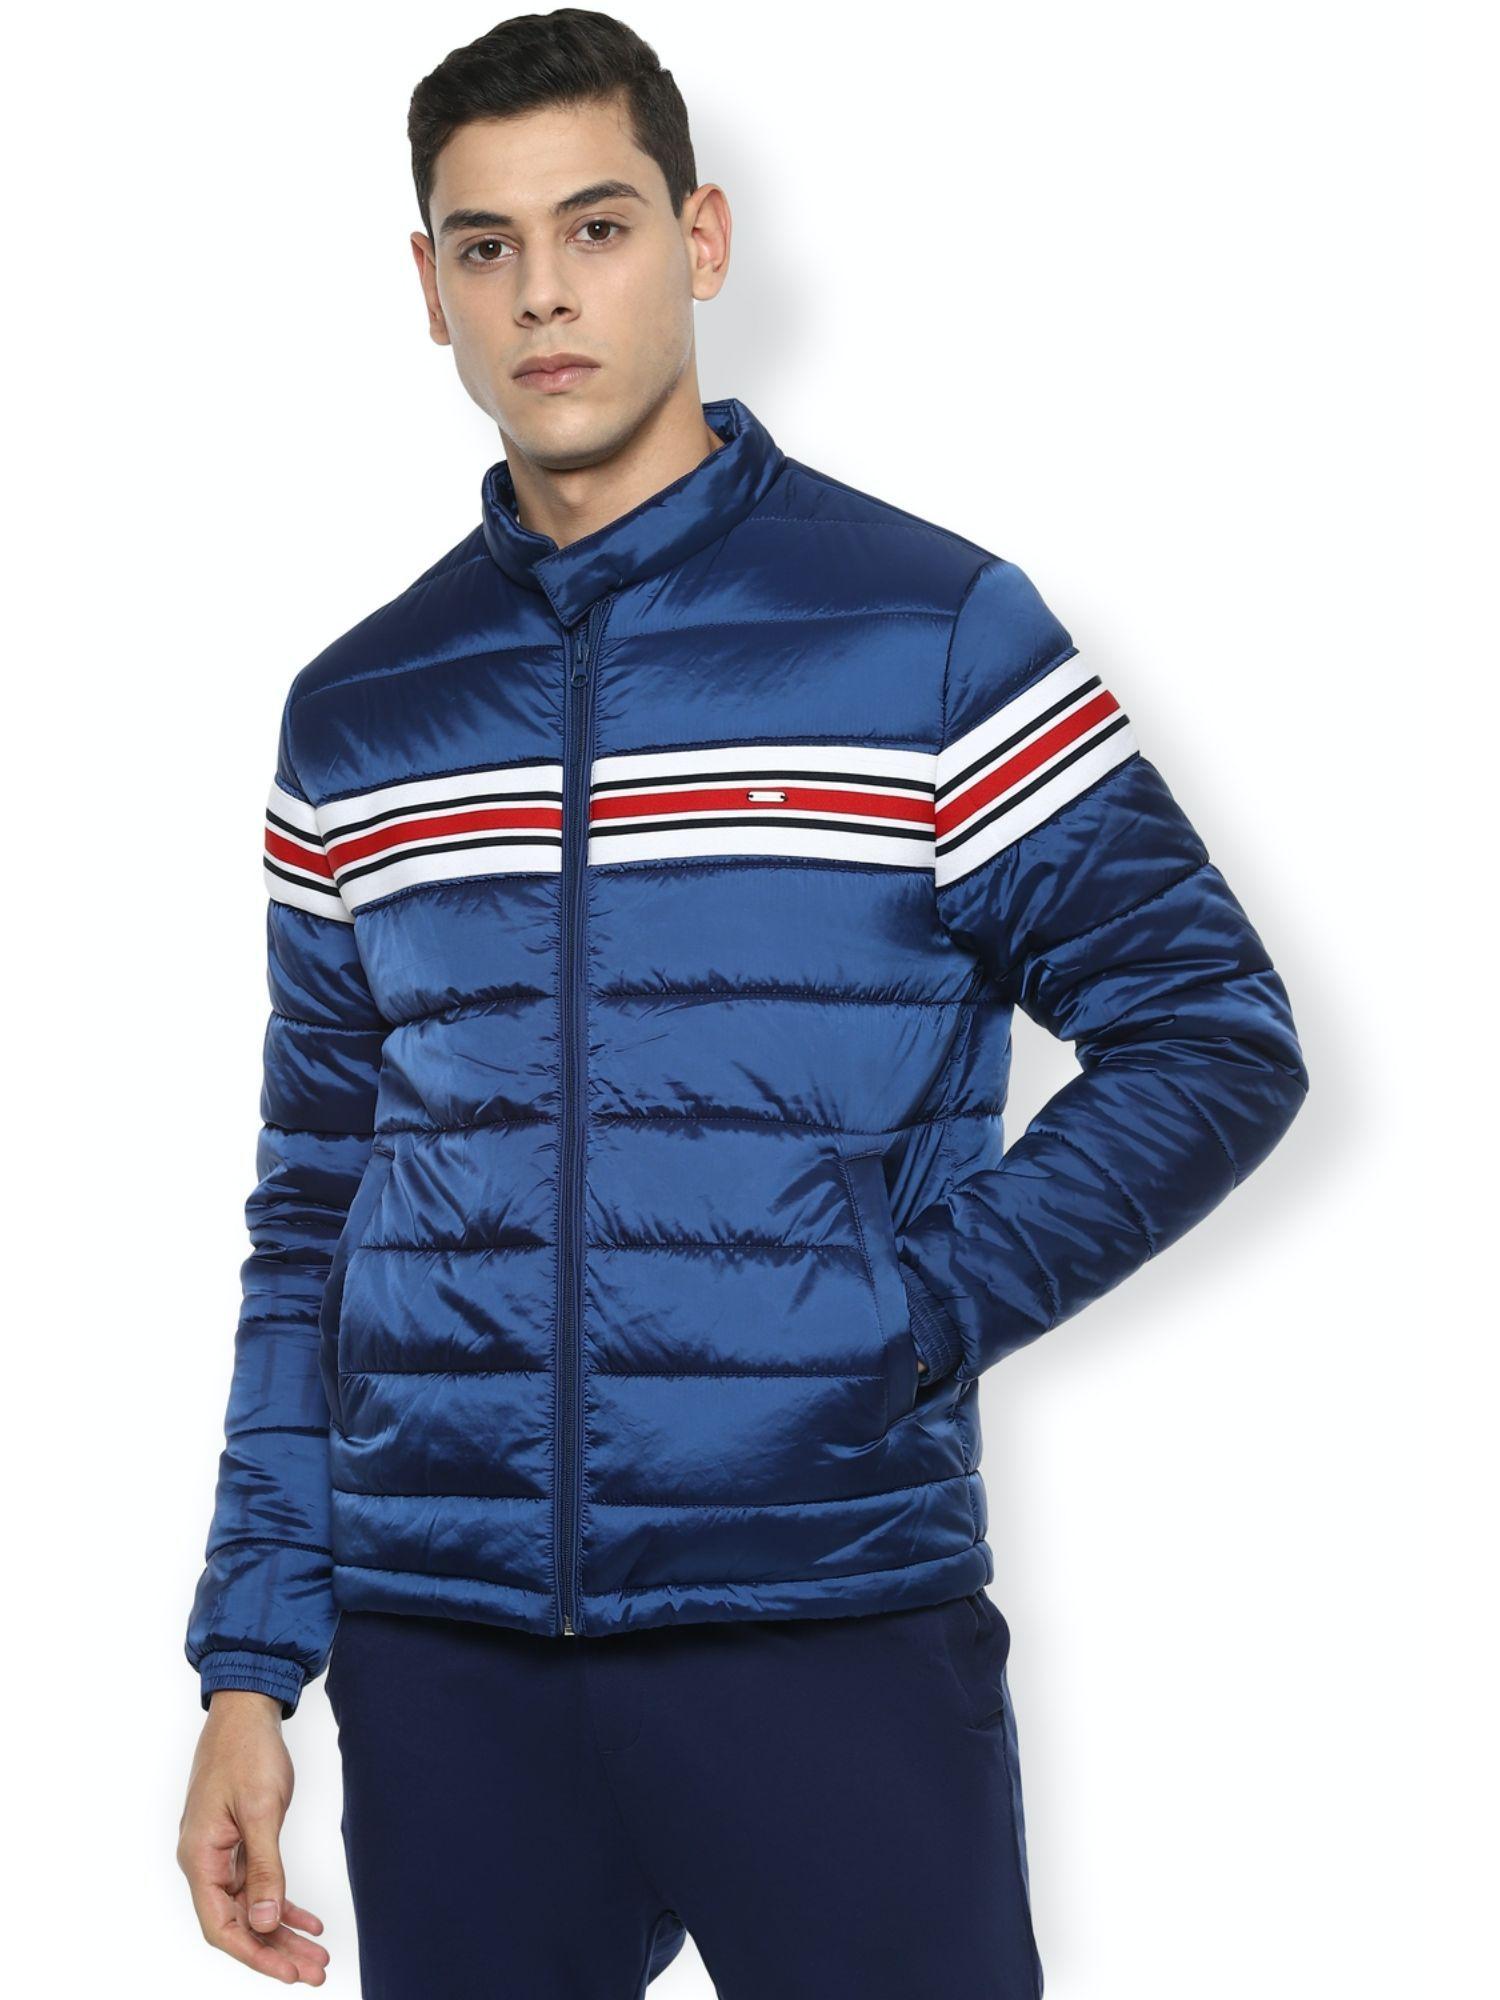 mens stripes blue jacket